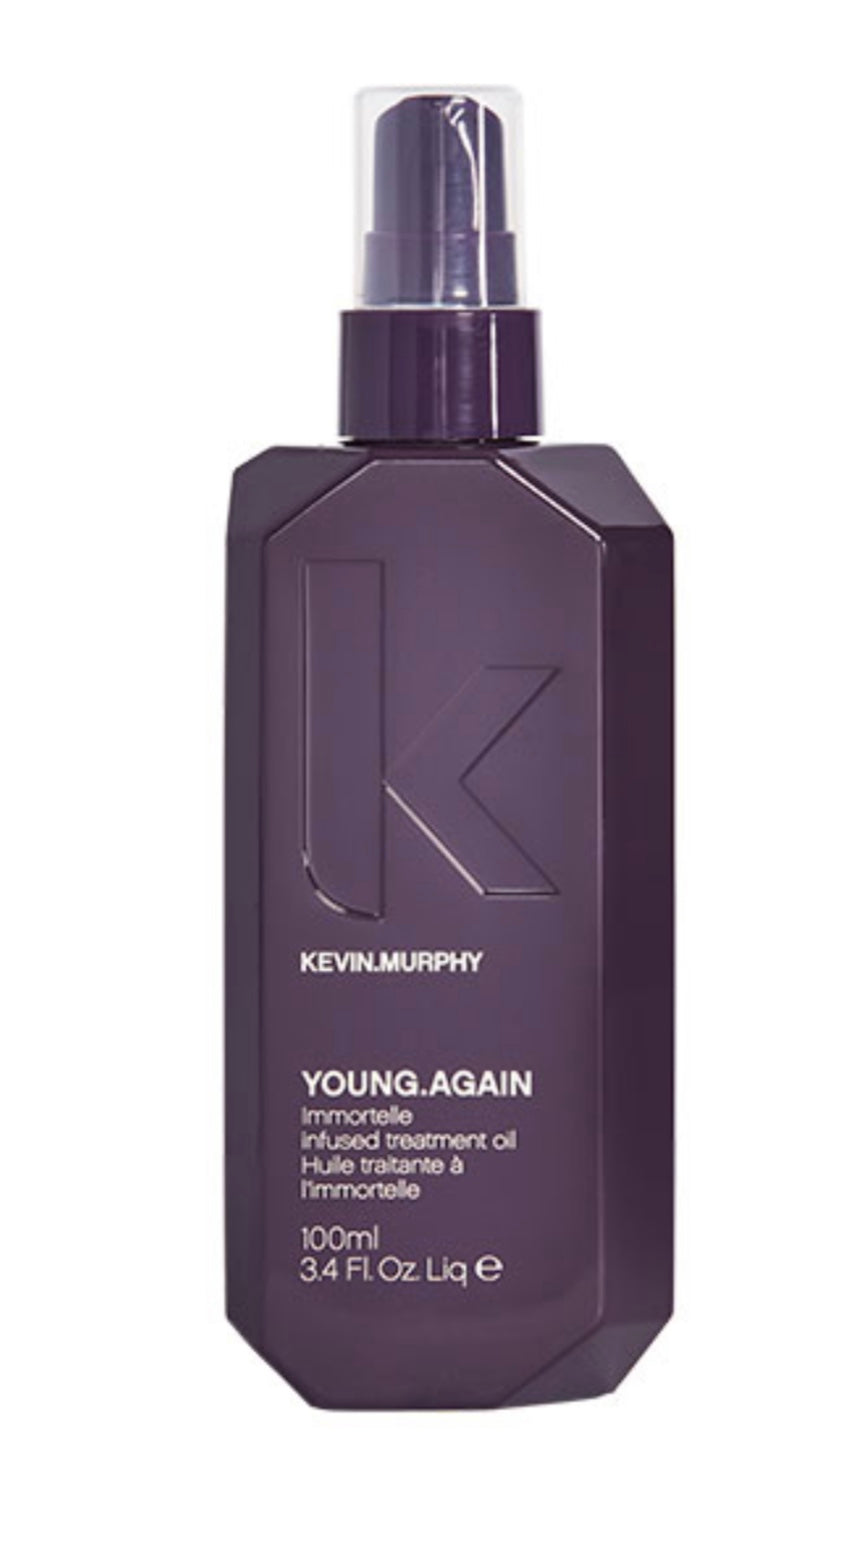 Kevin.Murphy - Young.Again treatment oil   3.4 fl. oz. / 100 ml